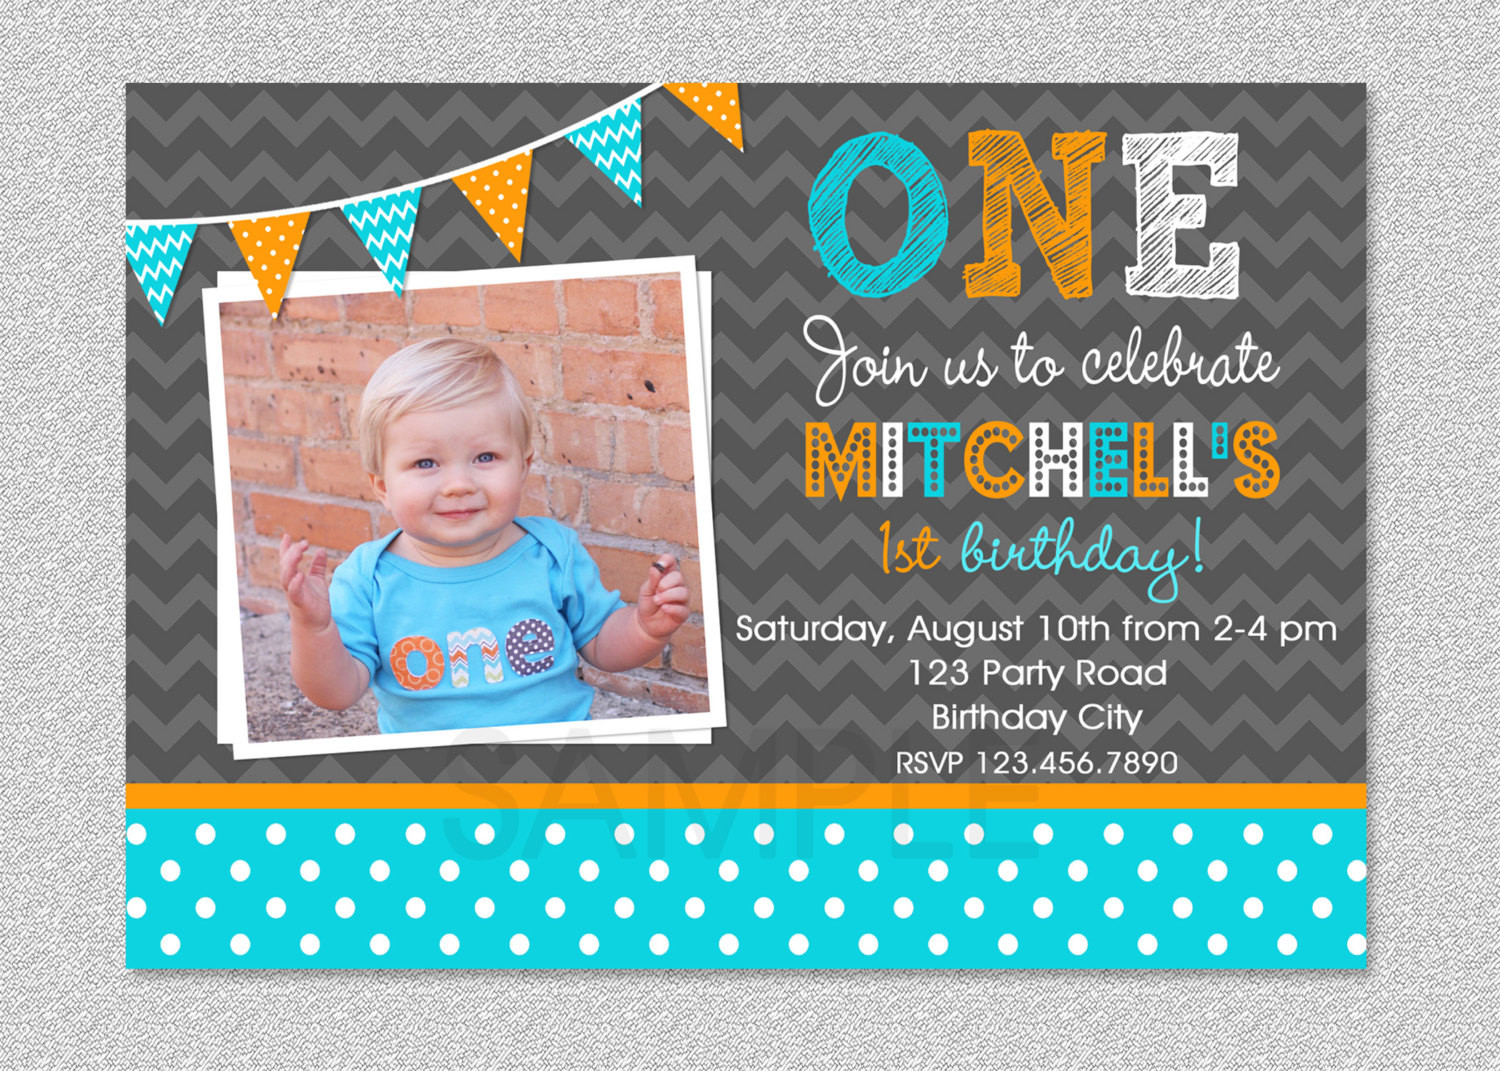 Best ideas about Boy 1st Birthday Invitations
. Save or Pin Boys 1st Birthday Invitation Chevron Polka by Now.